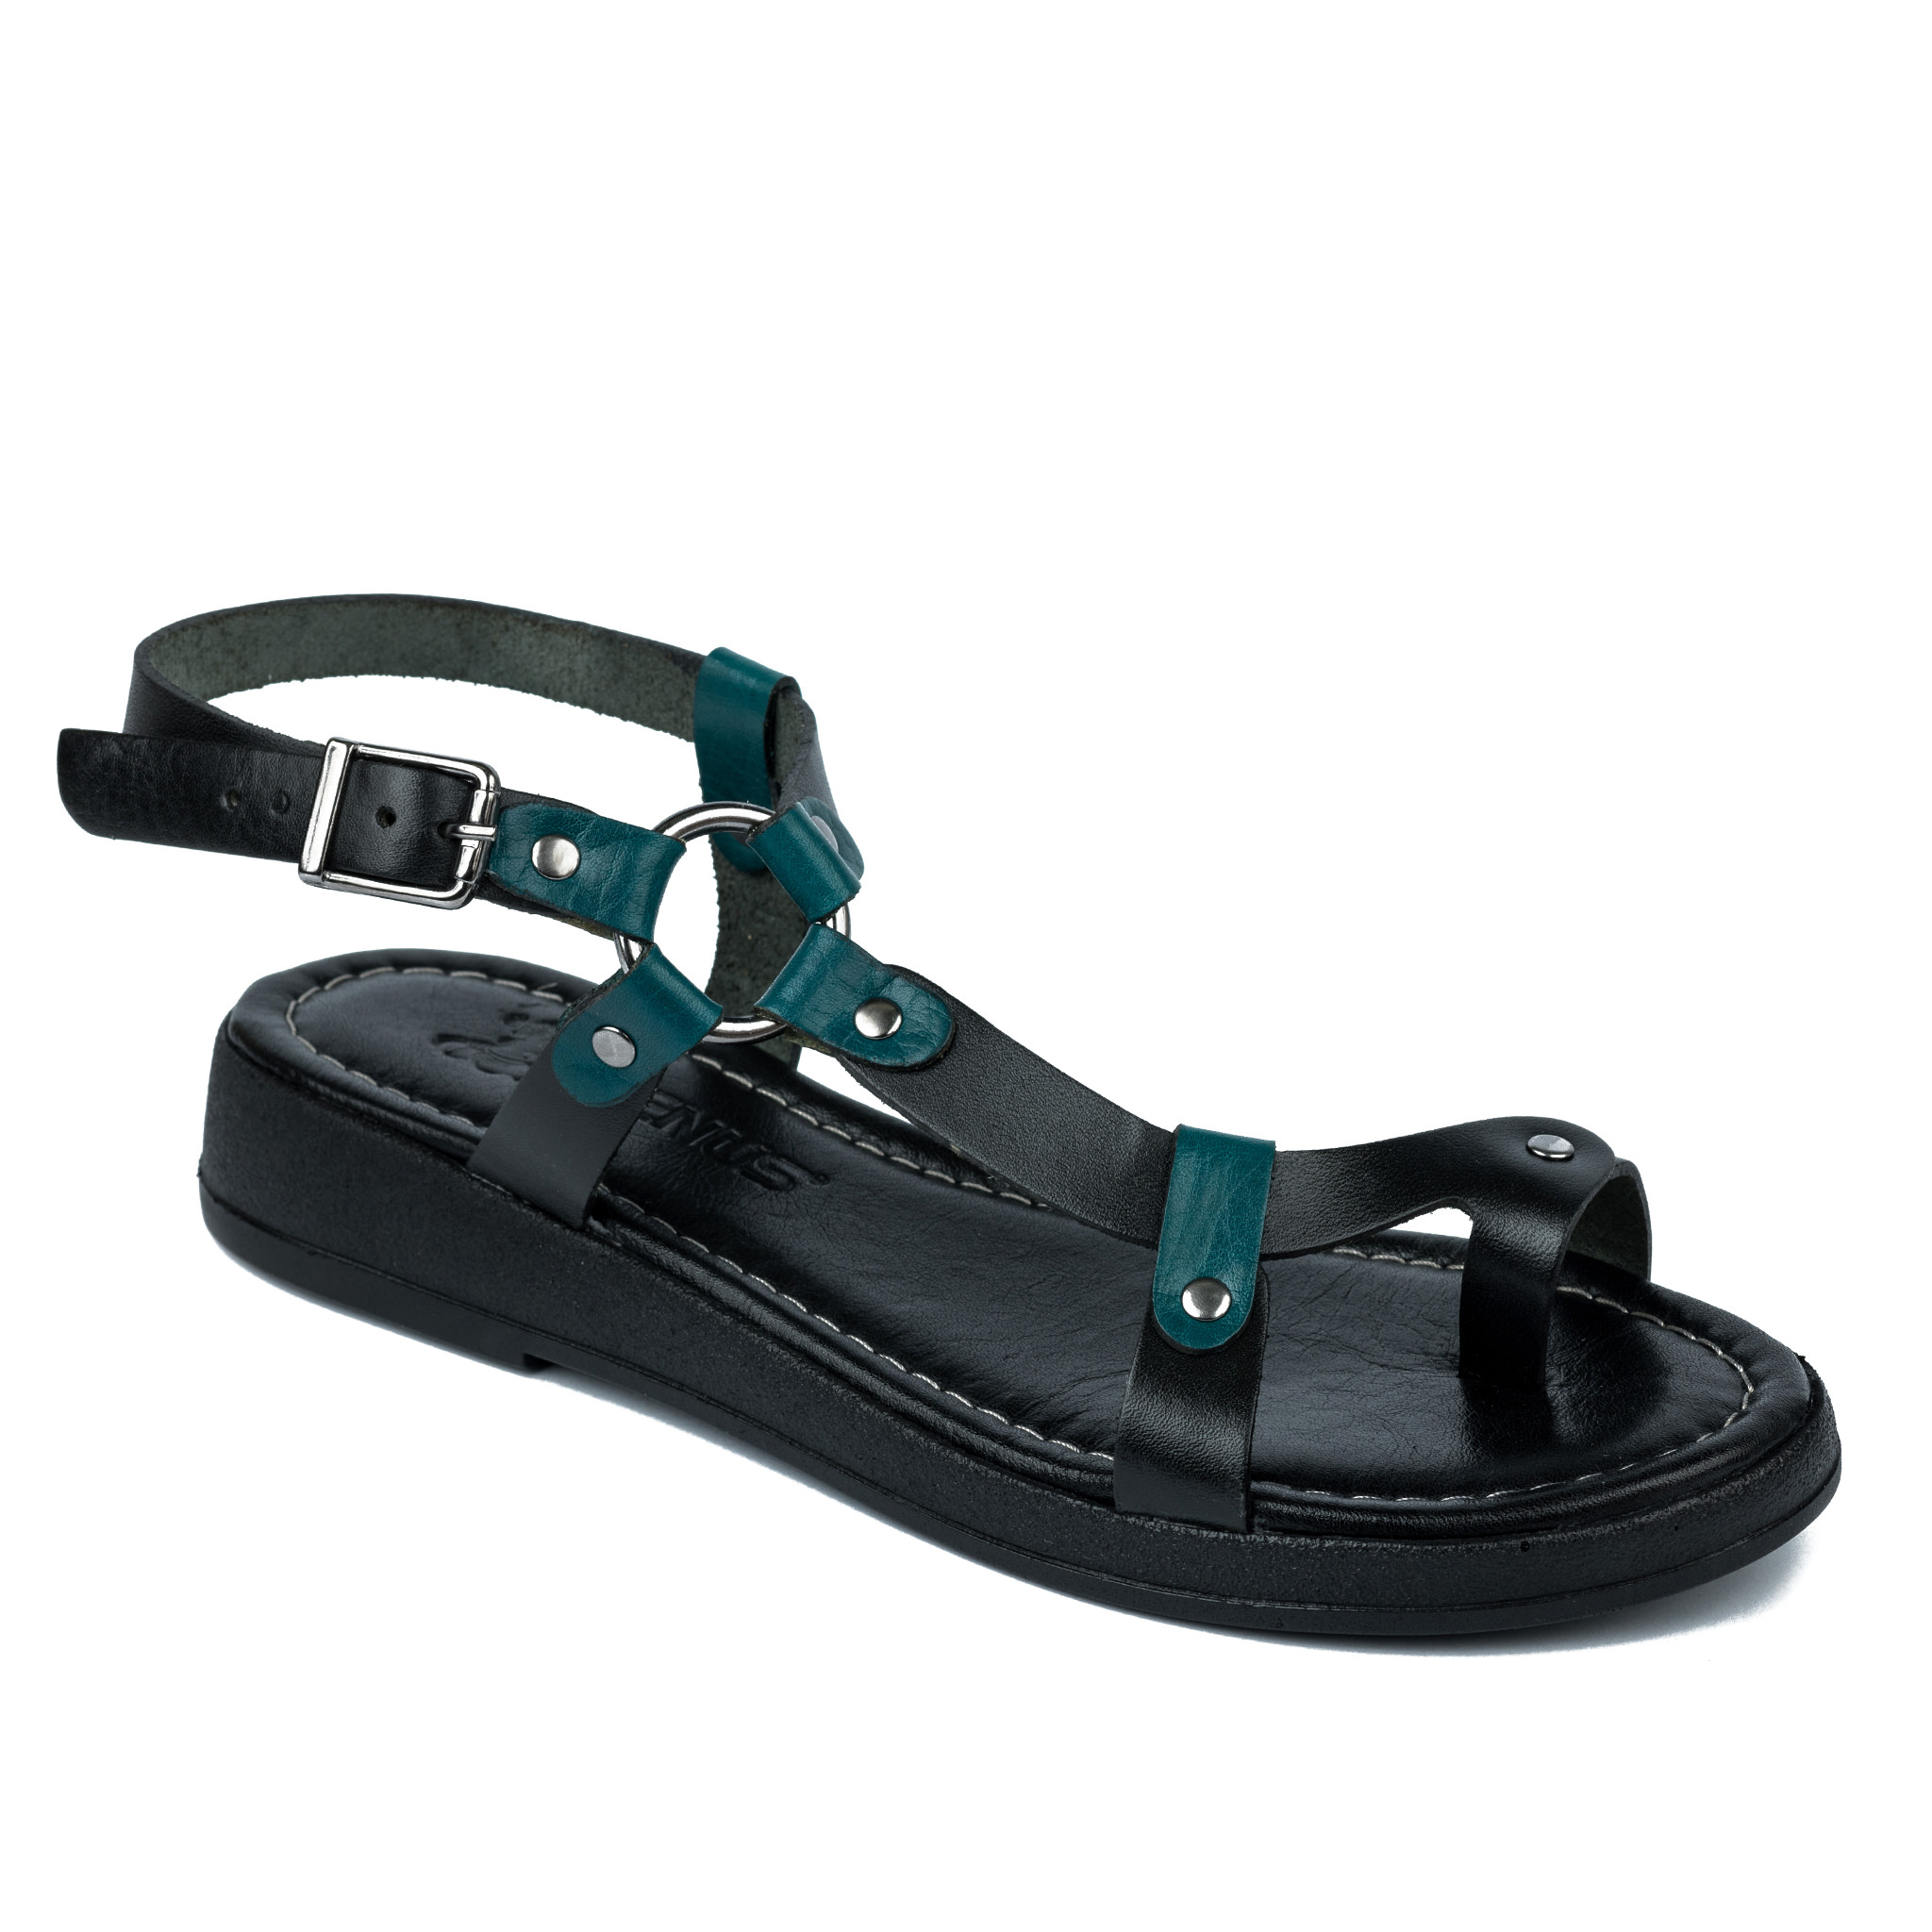 Women sandals A258 - BLACK